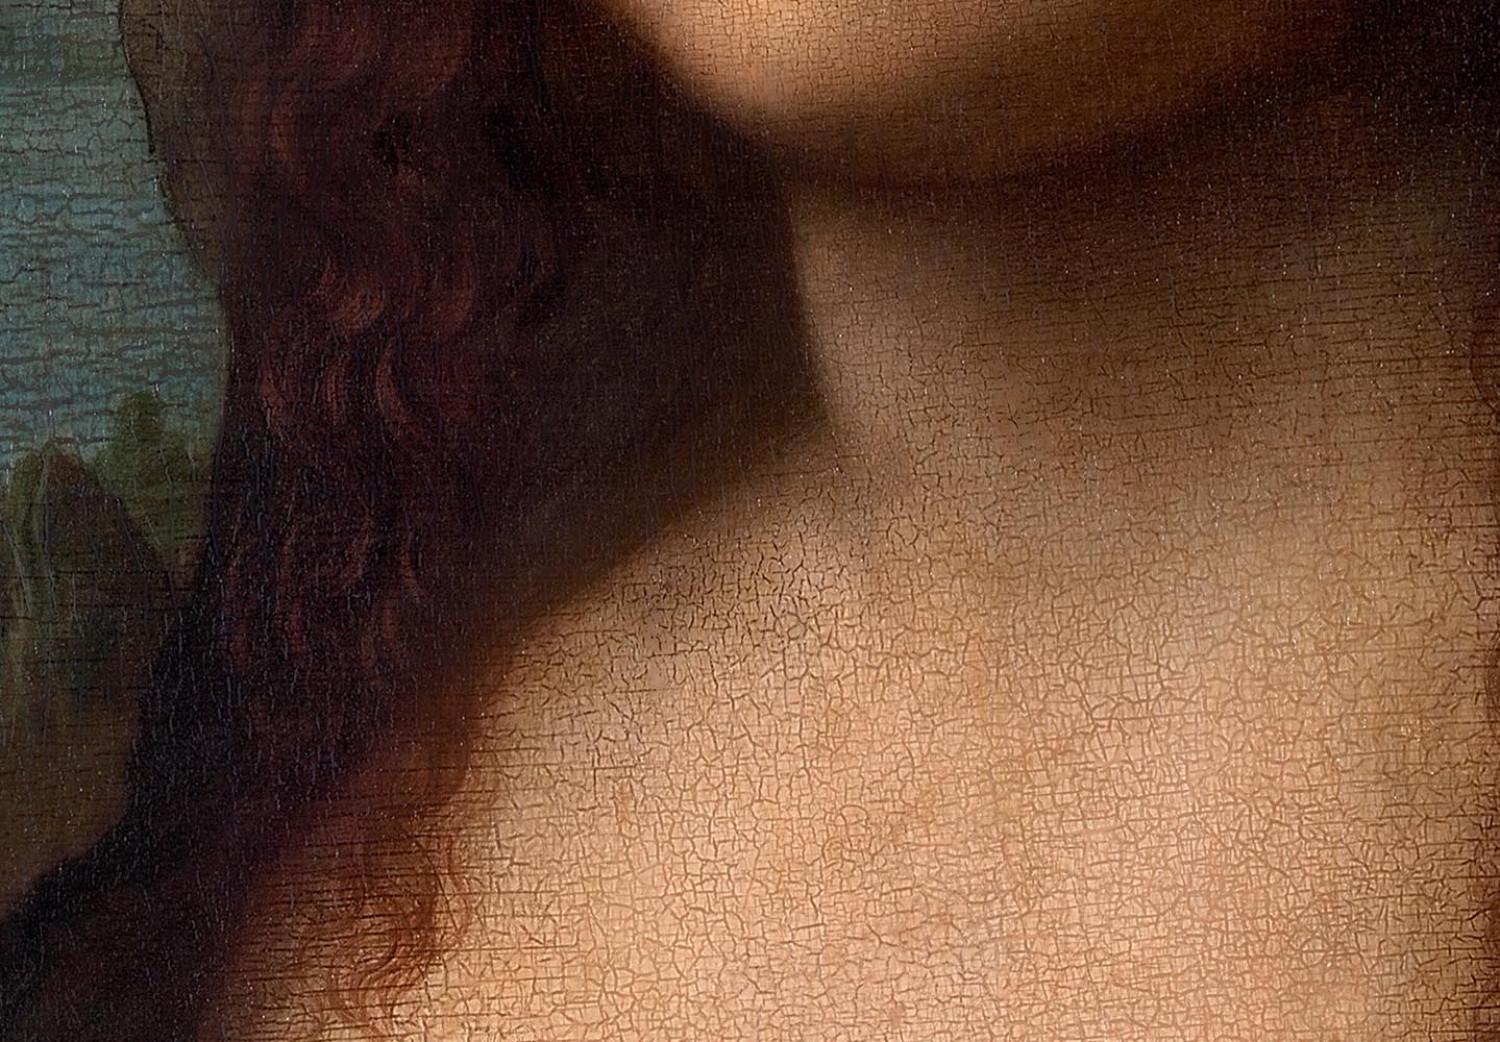 Round Canvas Leonardo Da Vinci - Gioconda - Painted Portrait of the Mona Lisa